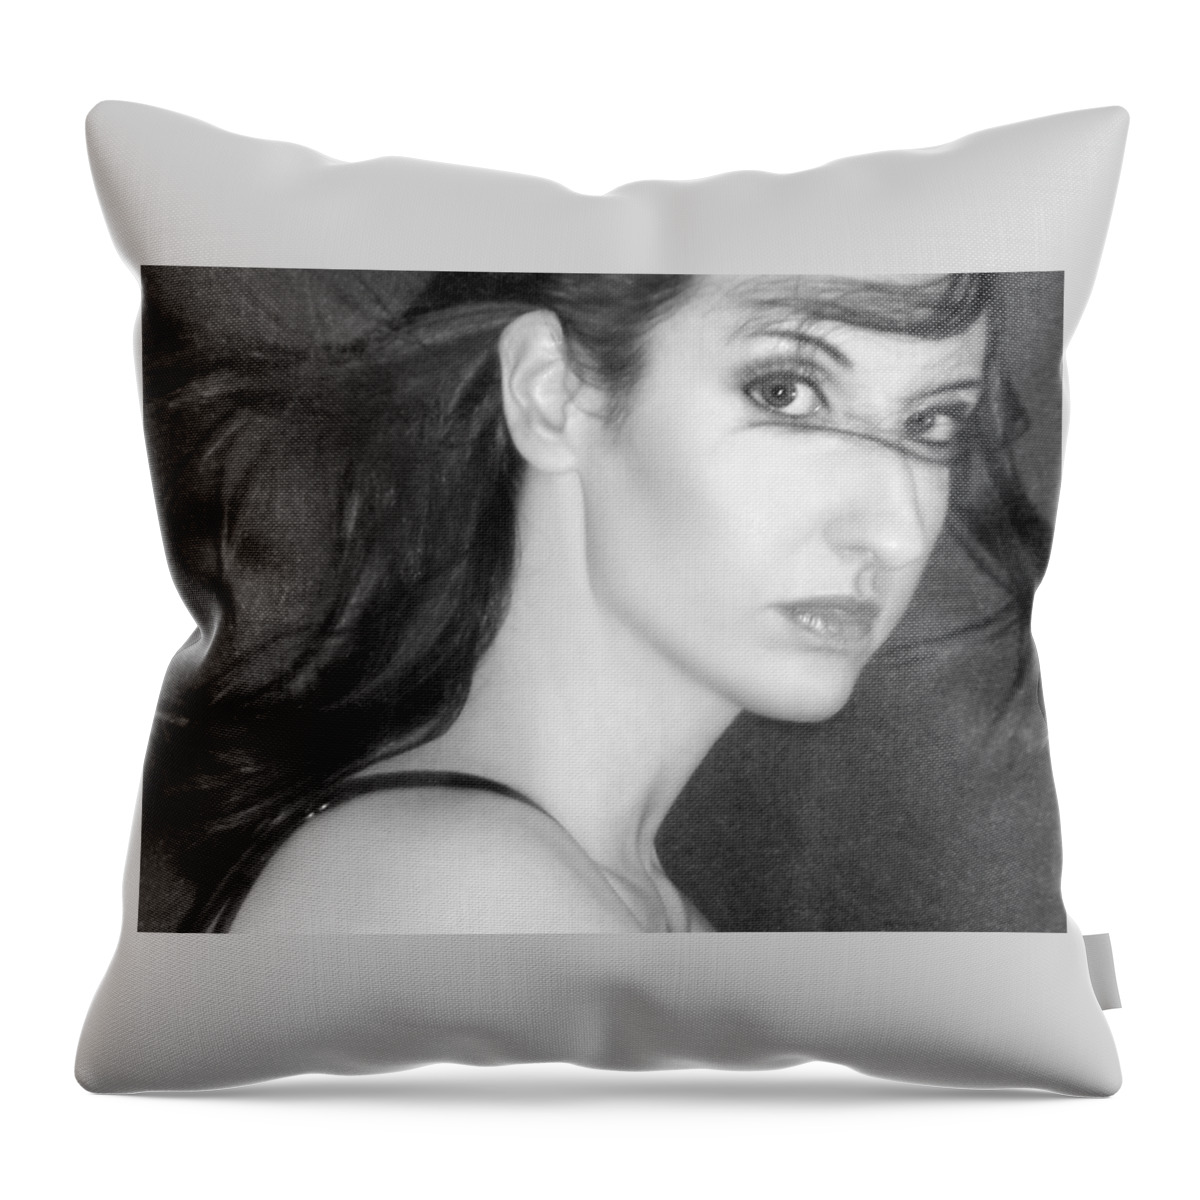 Beautiful Throw Pillow featuring the photograph Behind her eyes secrets sleep by Jaeda DeWalt